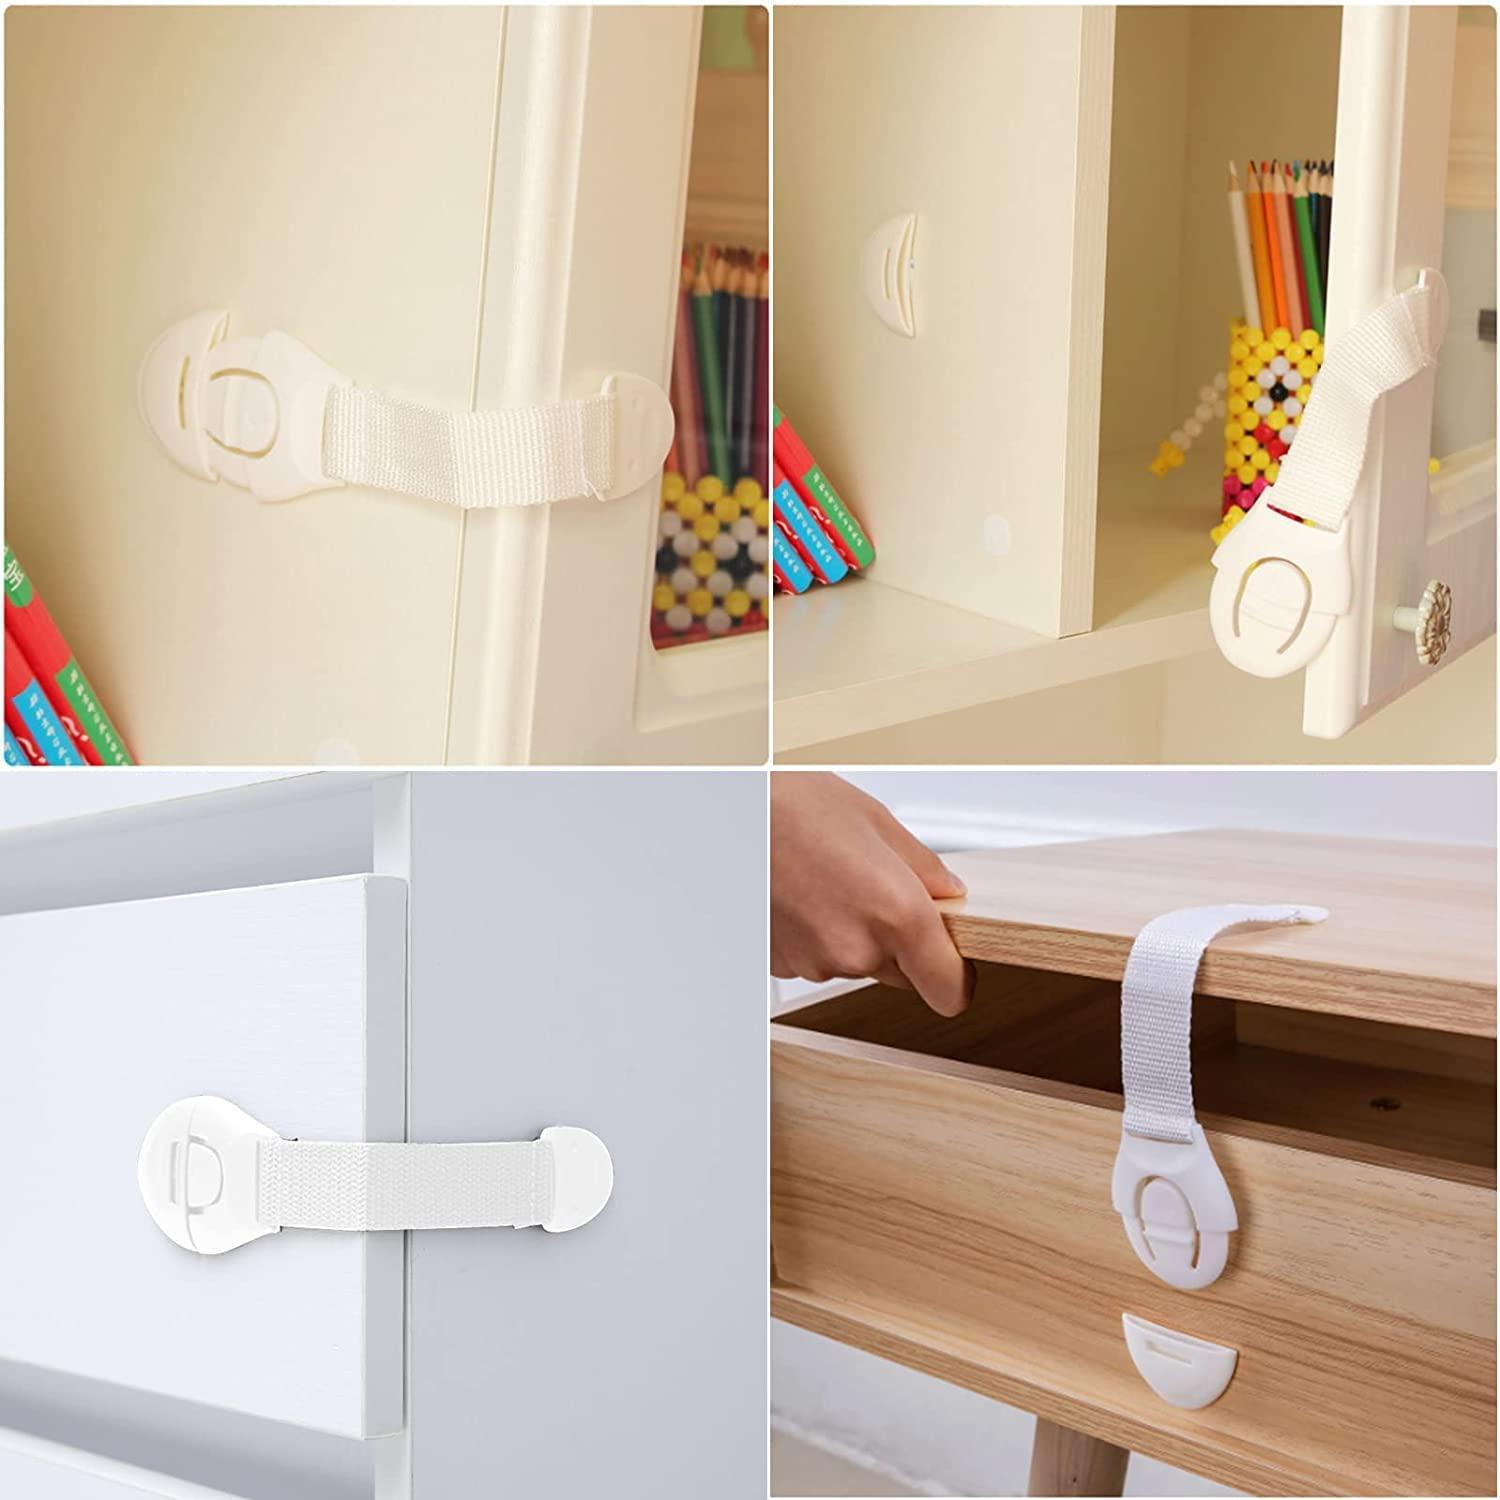 Child Safety Strap Locks (4 Pack) for Fridge, Cabinets, Drawers,  Dishwasher, Toilet, 3M Adhesive No Drilling - b…